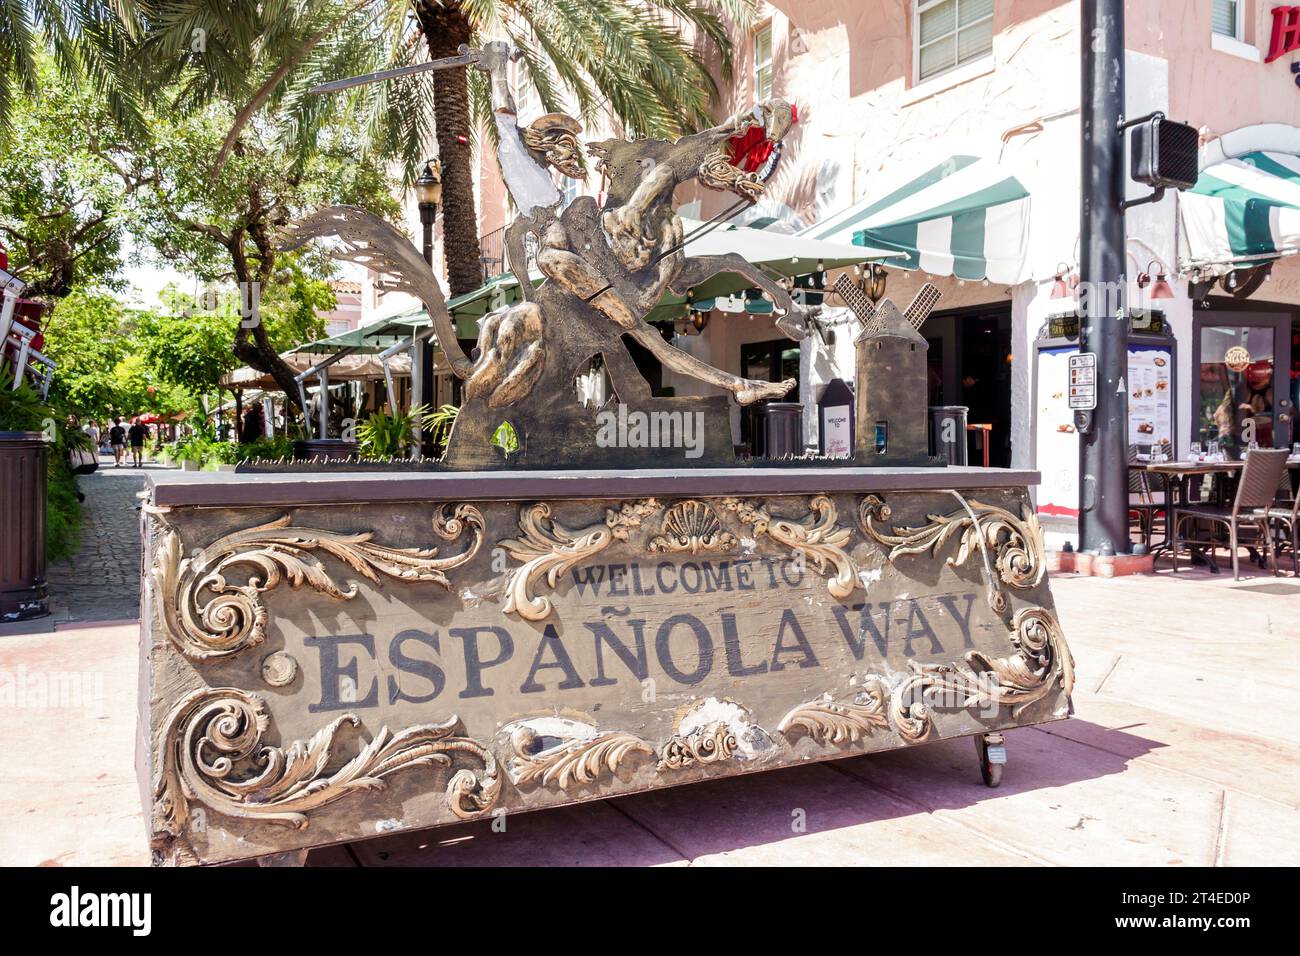 Miami Beach Florida,Espanola Way historic Spanish Village,pedestrian walkway welcome sign,art artwork sculpture Don Quixote figure Stock Photo